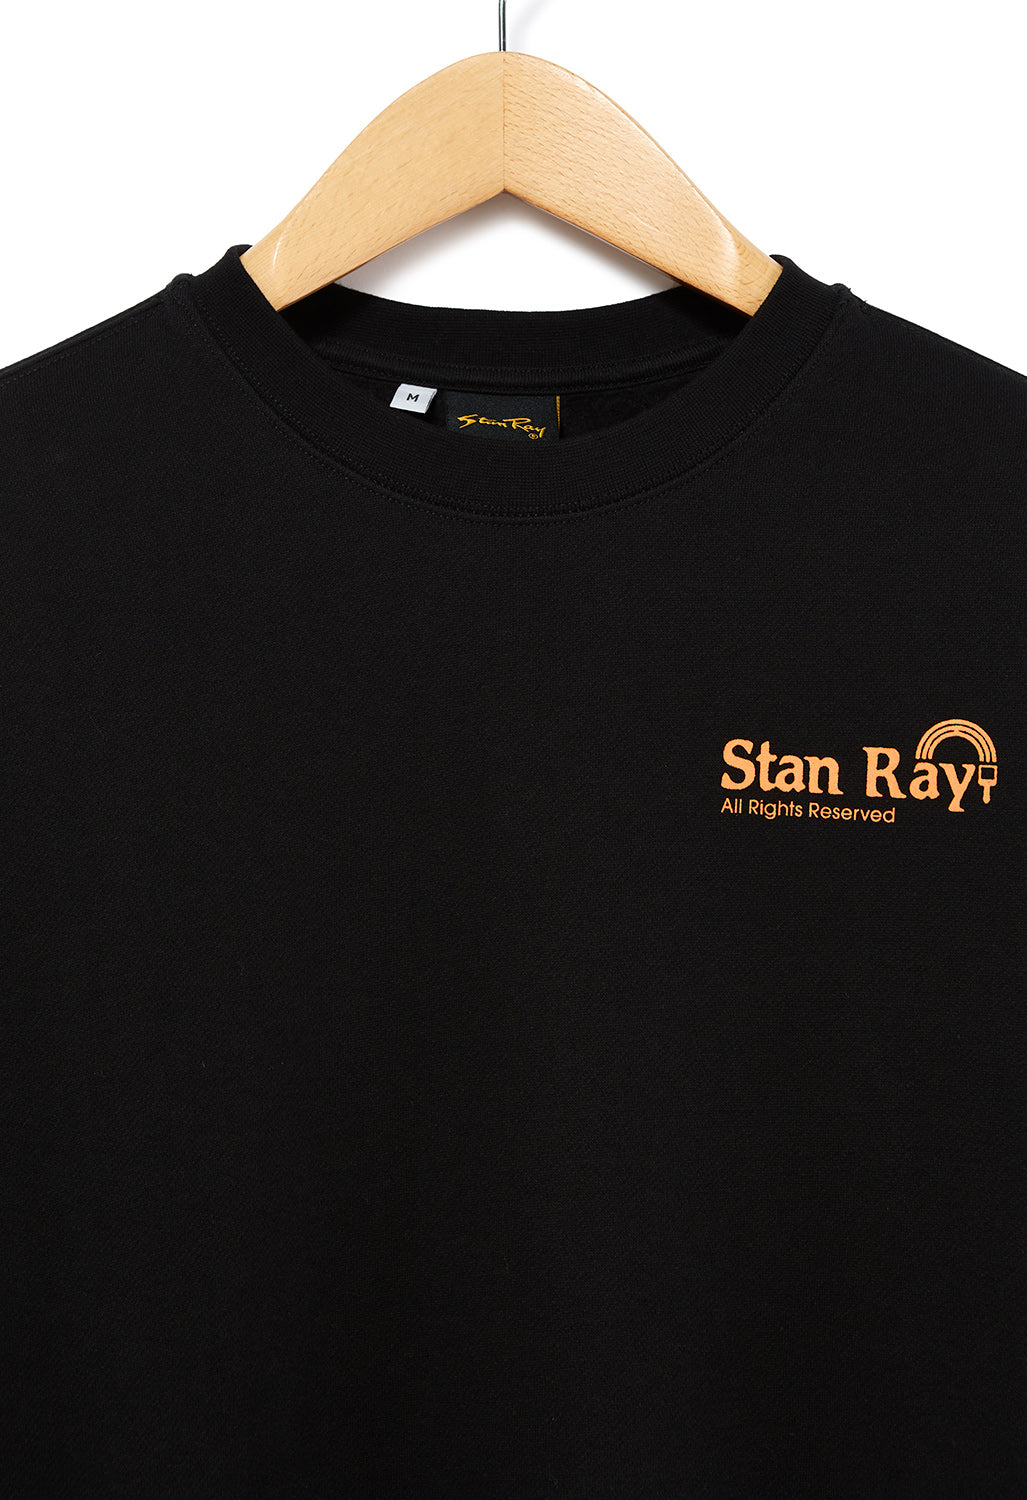 Stan Ray Men's Dreamworks Crew - Black